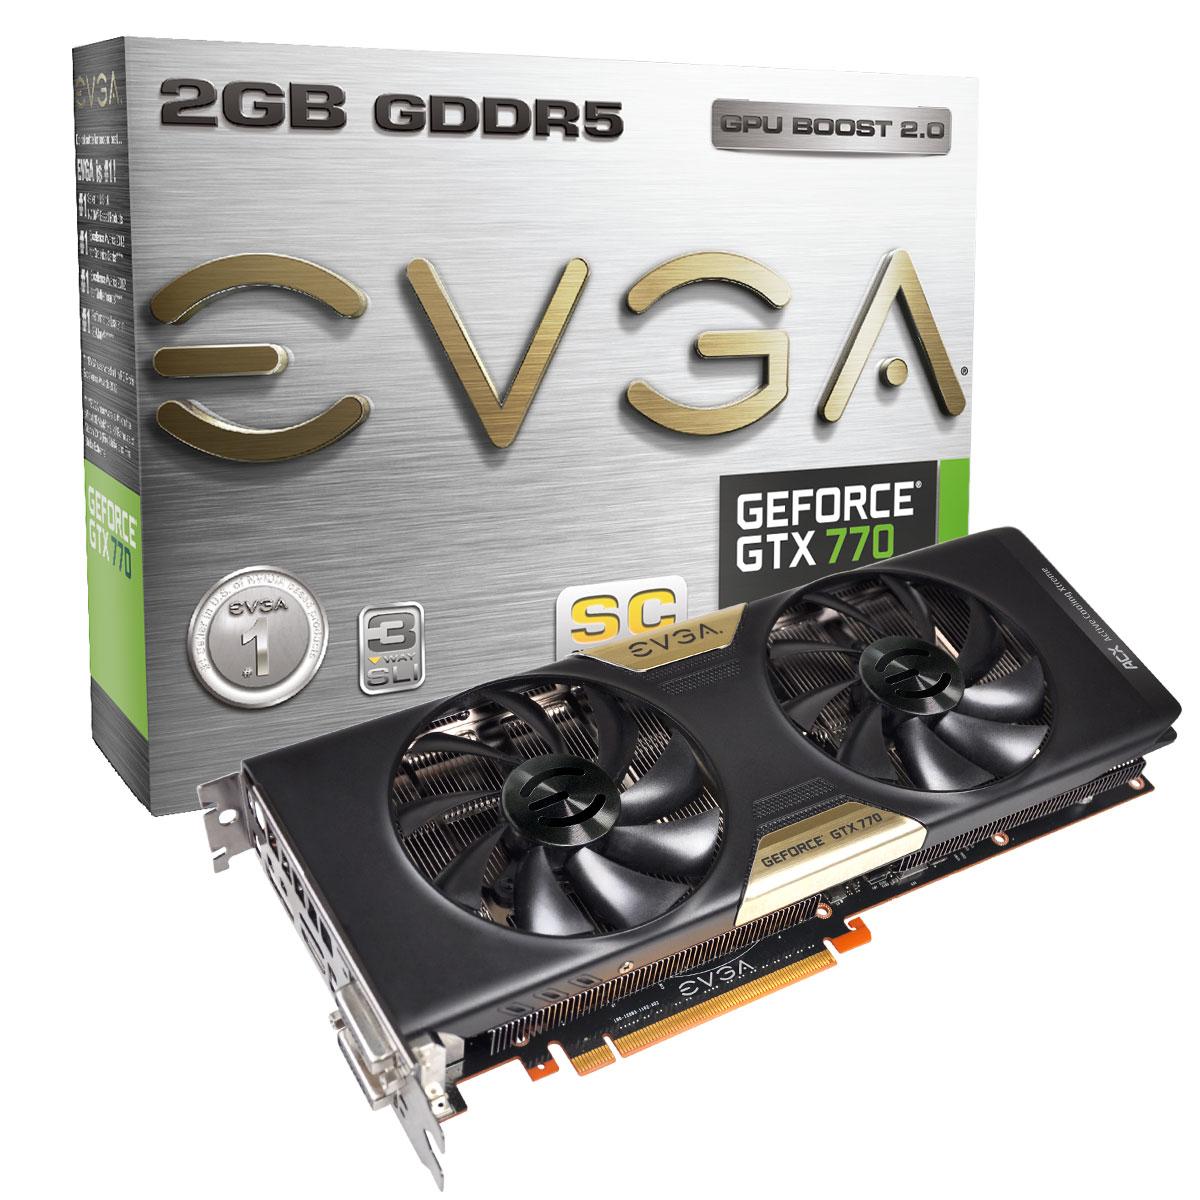 Foto EVGA GeForce GTX 770 SC w/ ACX Cooler 2GB GDDR5 PCIe 3.0 foto 679185